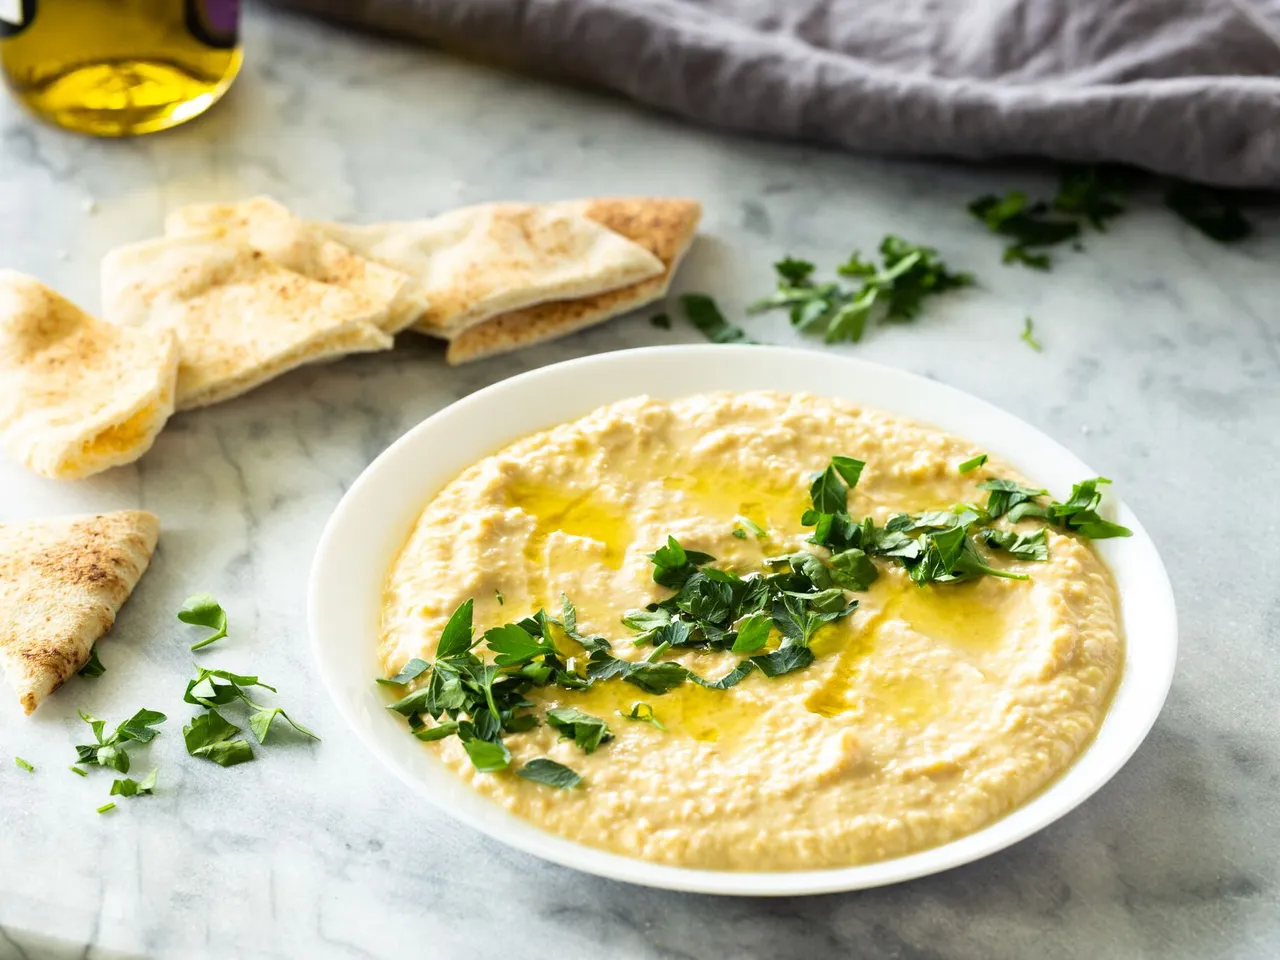 Try these Hummus recipes because 'Hummus is Yummus'!